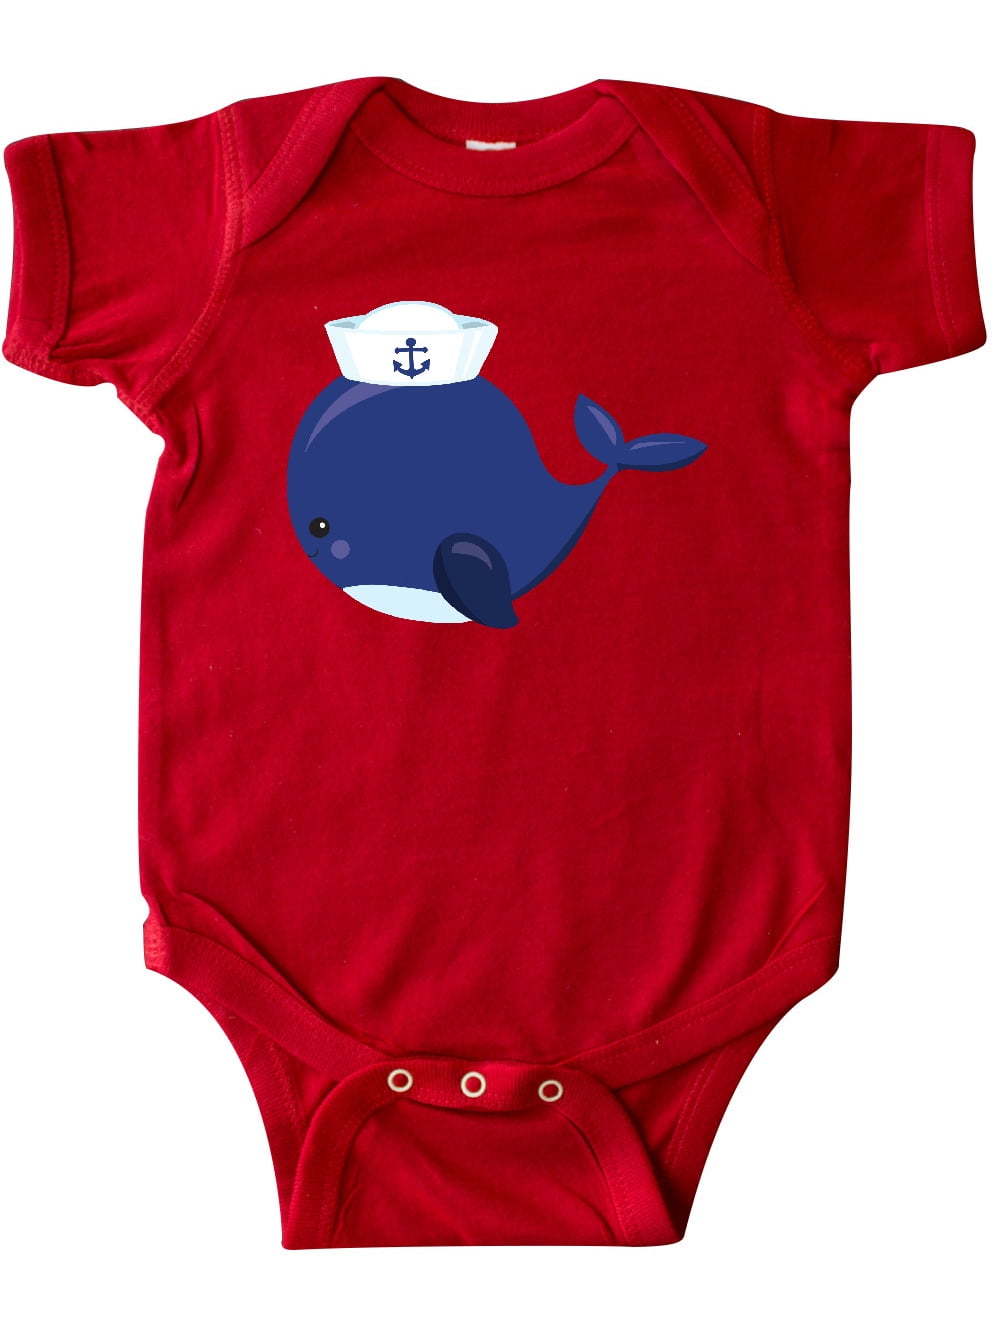 Seafarer Animal Unisex Baby Bodysuit Infant Short Sleeve Outfits 